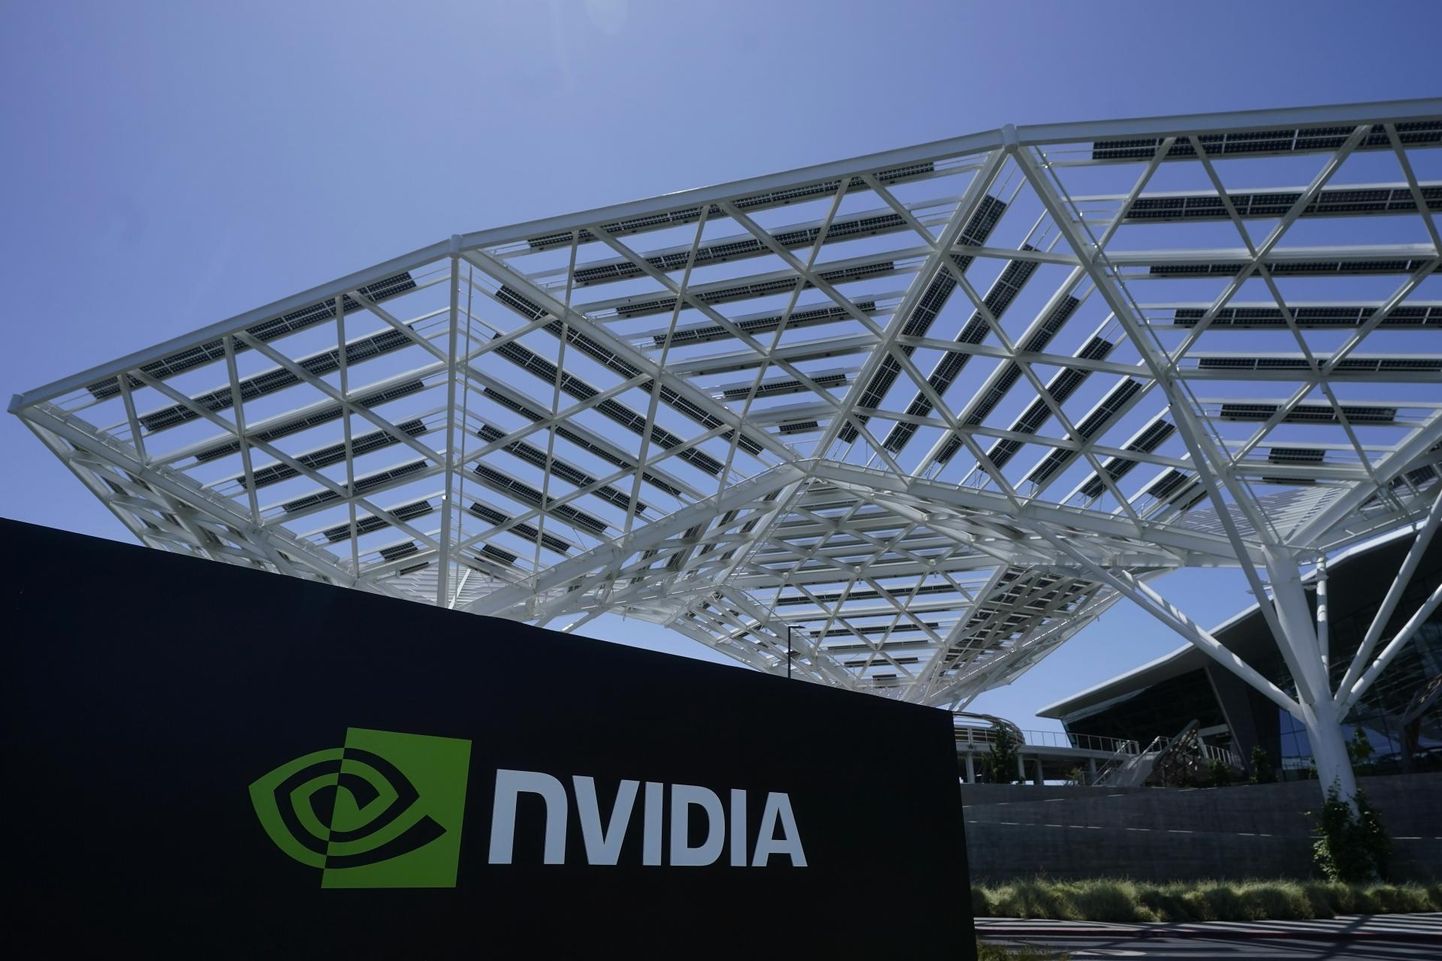 Nvidia logo Santa Claras Californias.